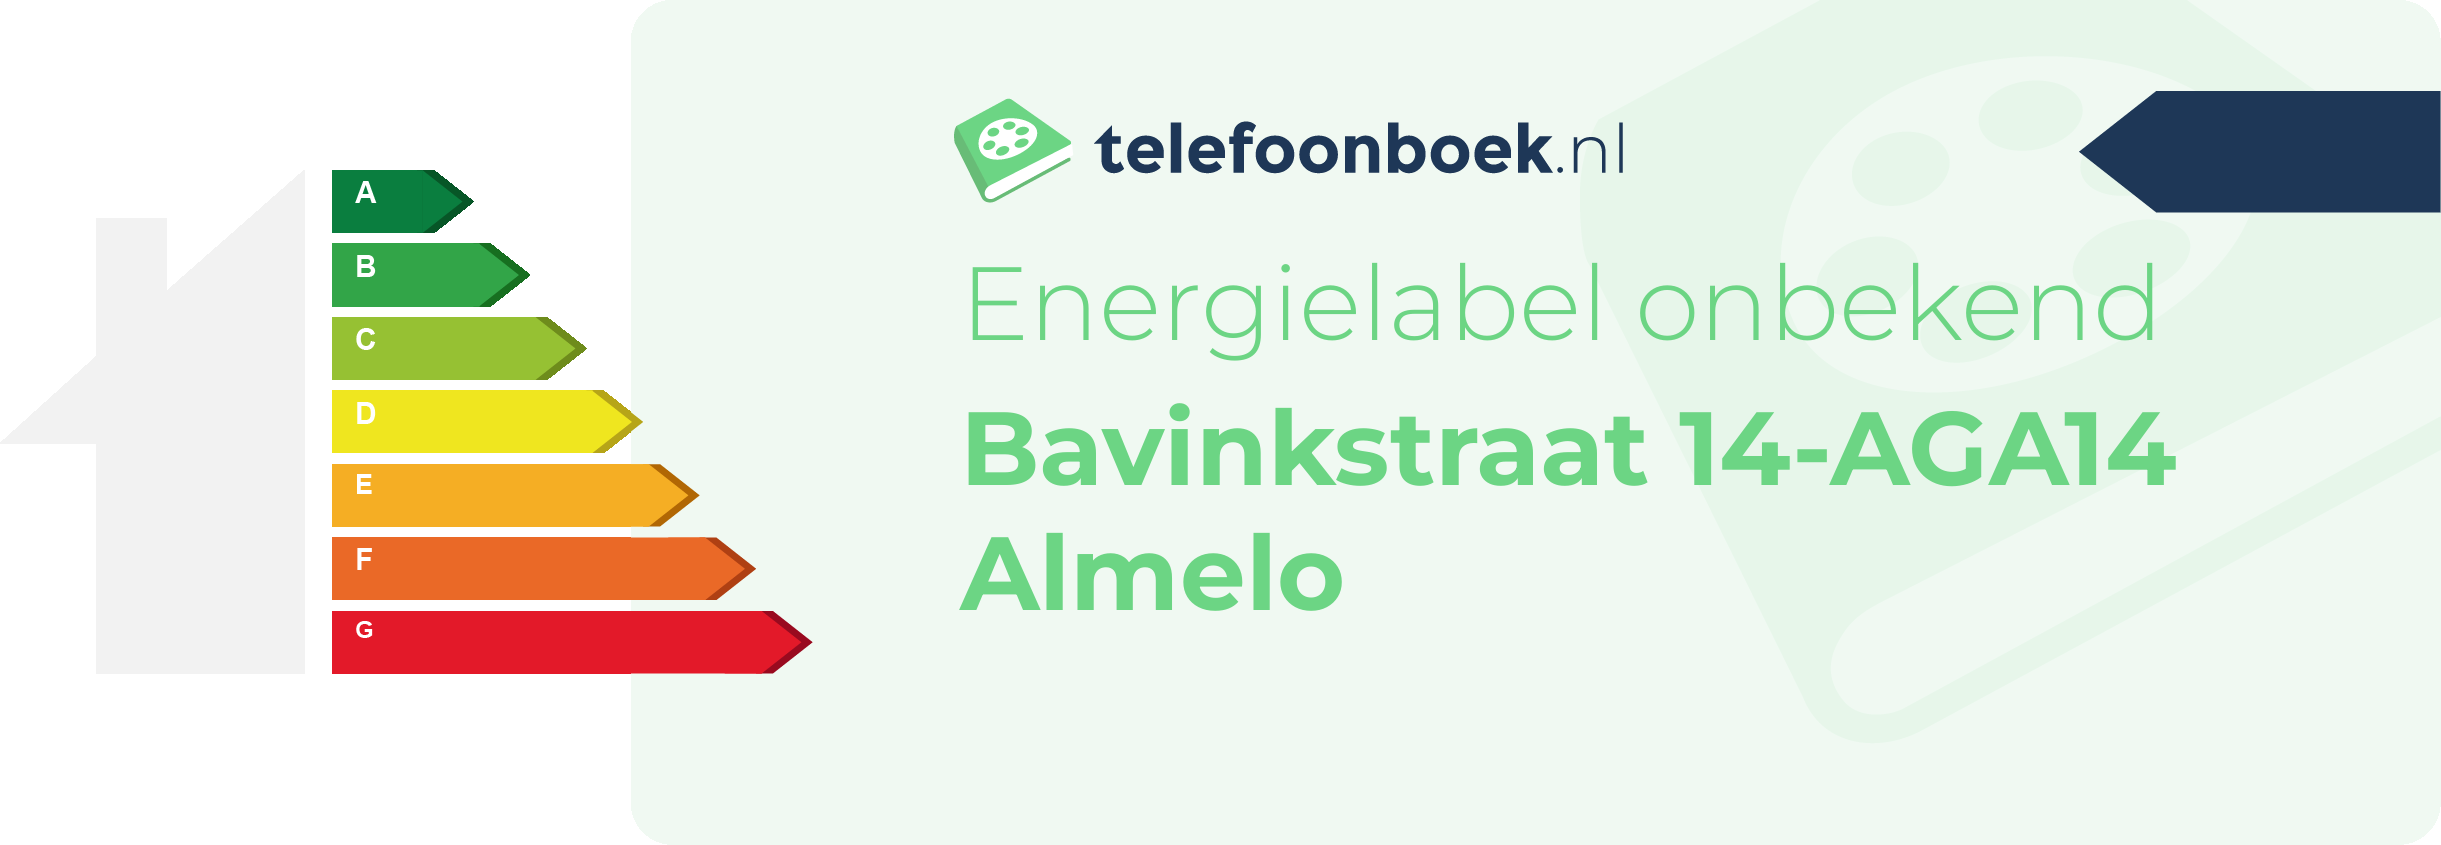 Energielabel Bavinkstraat 14-AGA14 Almelo